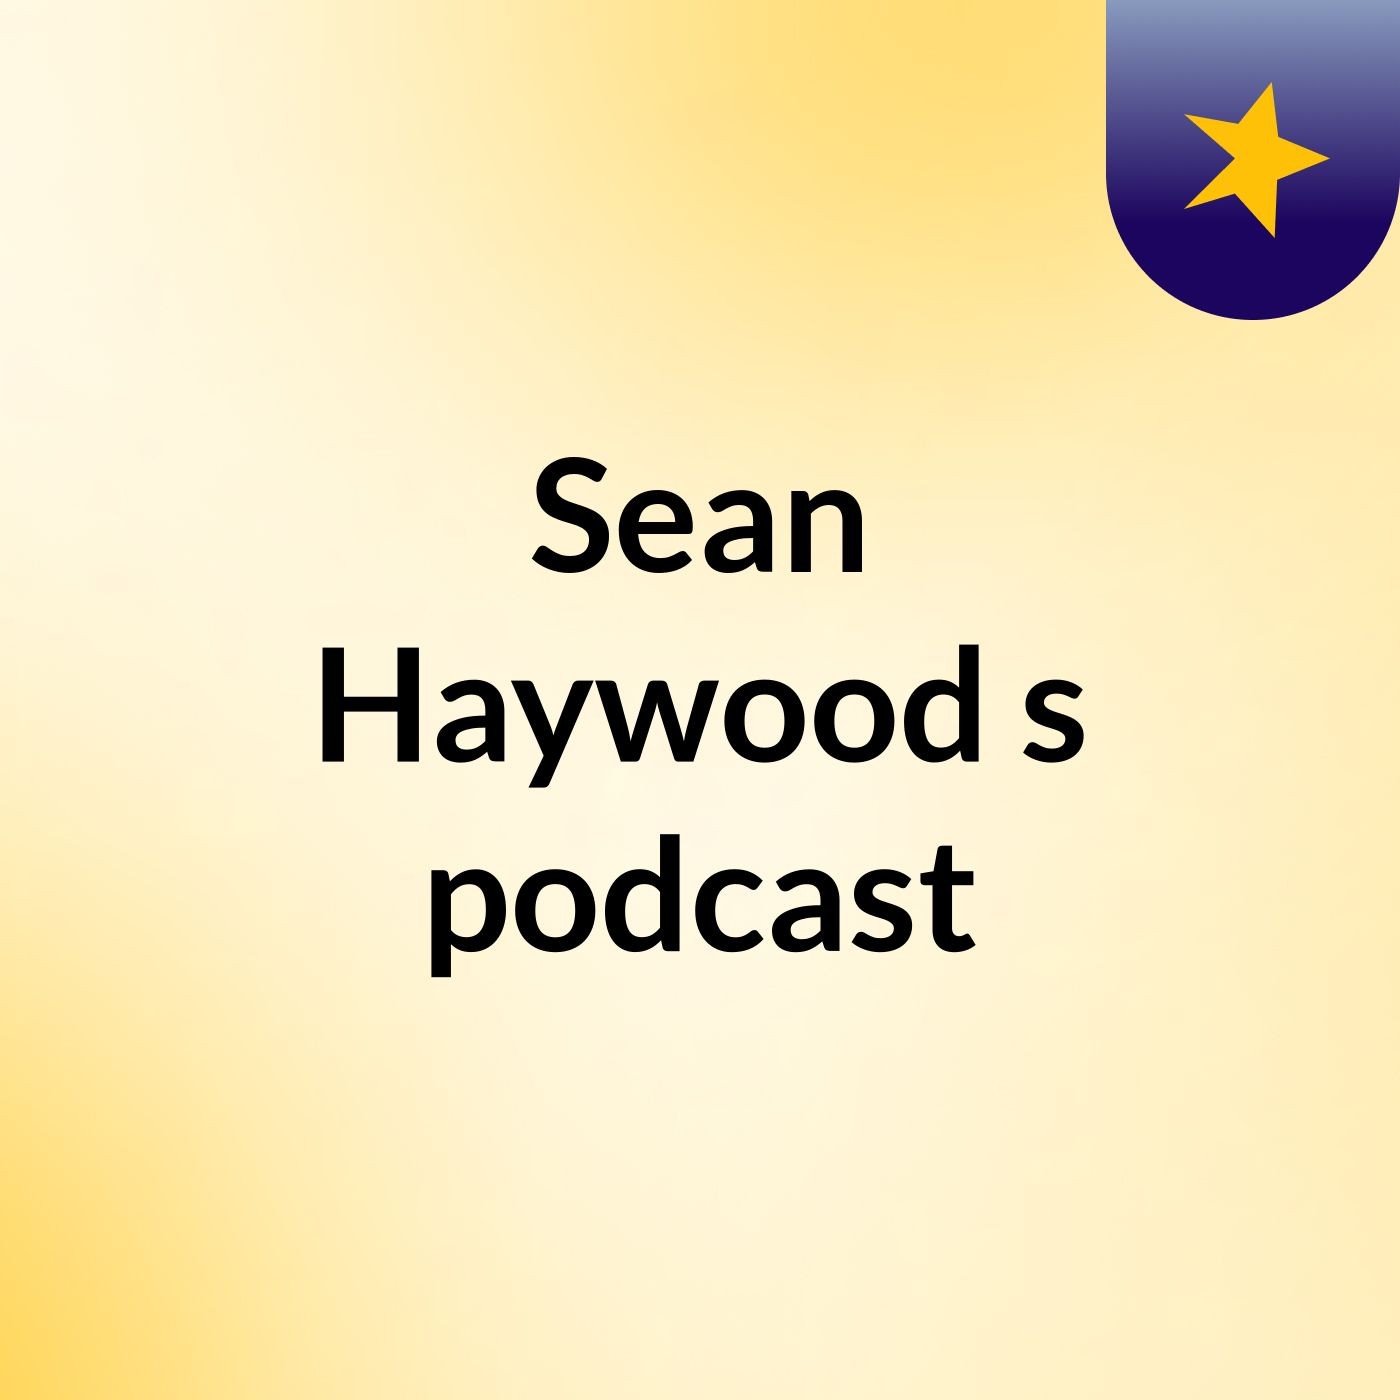 Sean Haywood's podcast